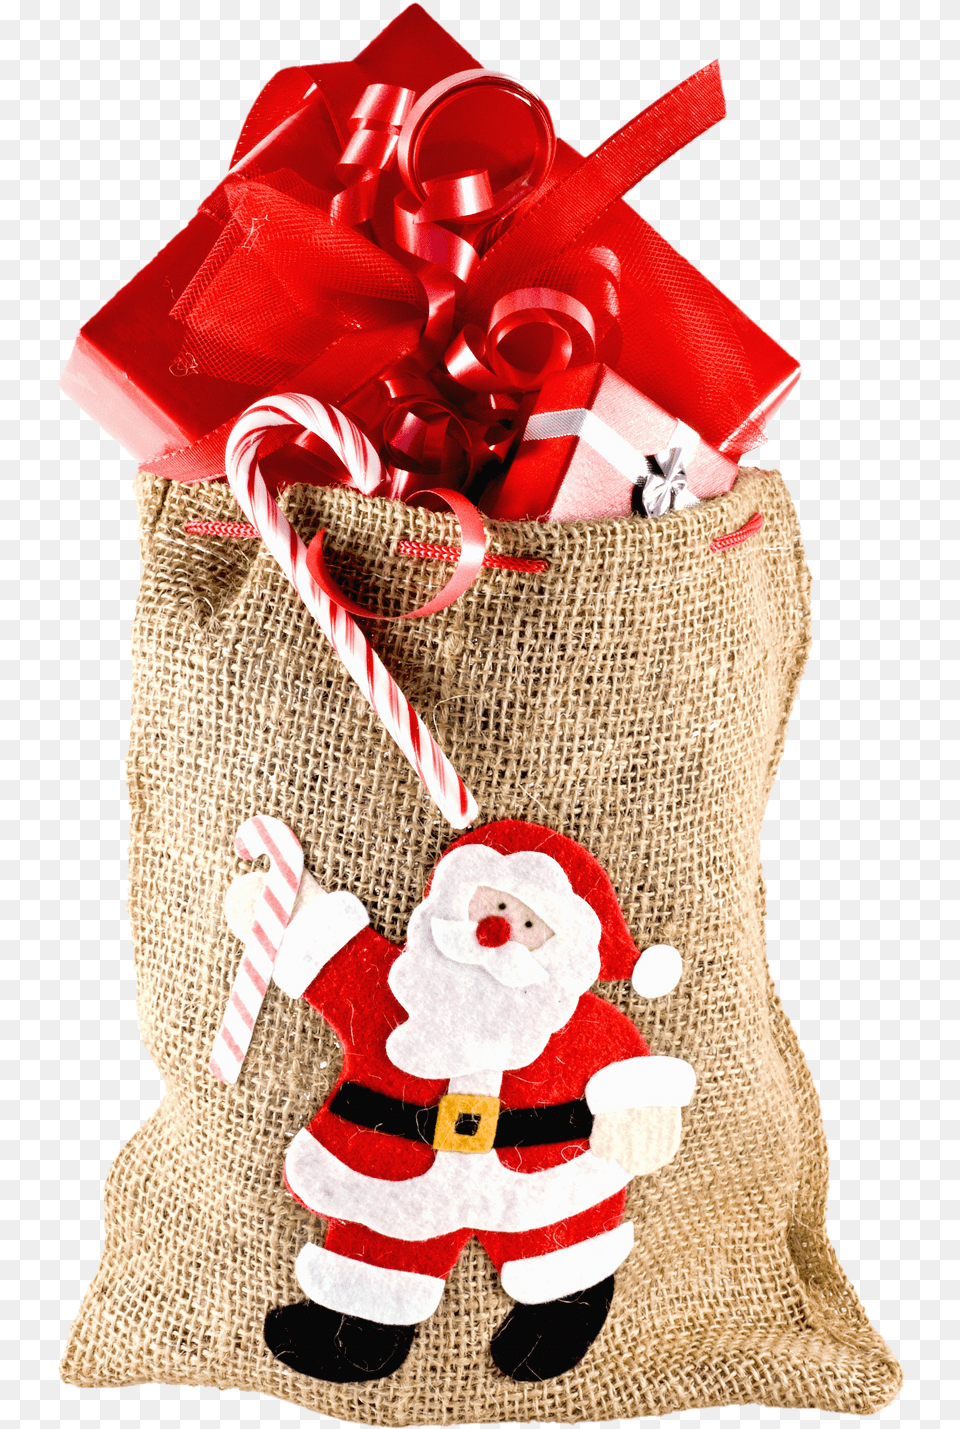 Christmas Sack Gift Transparent Image Pngpix Gift, Bag, Baby, Clothing, Footwear Png